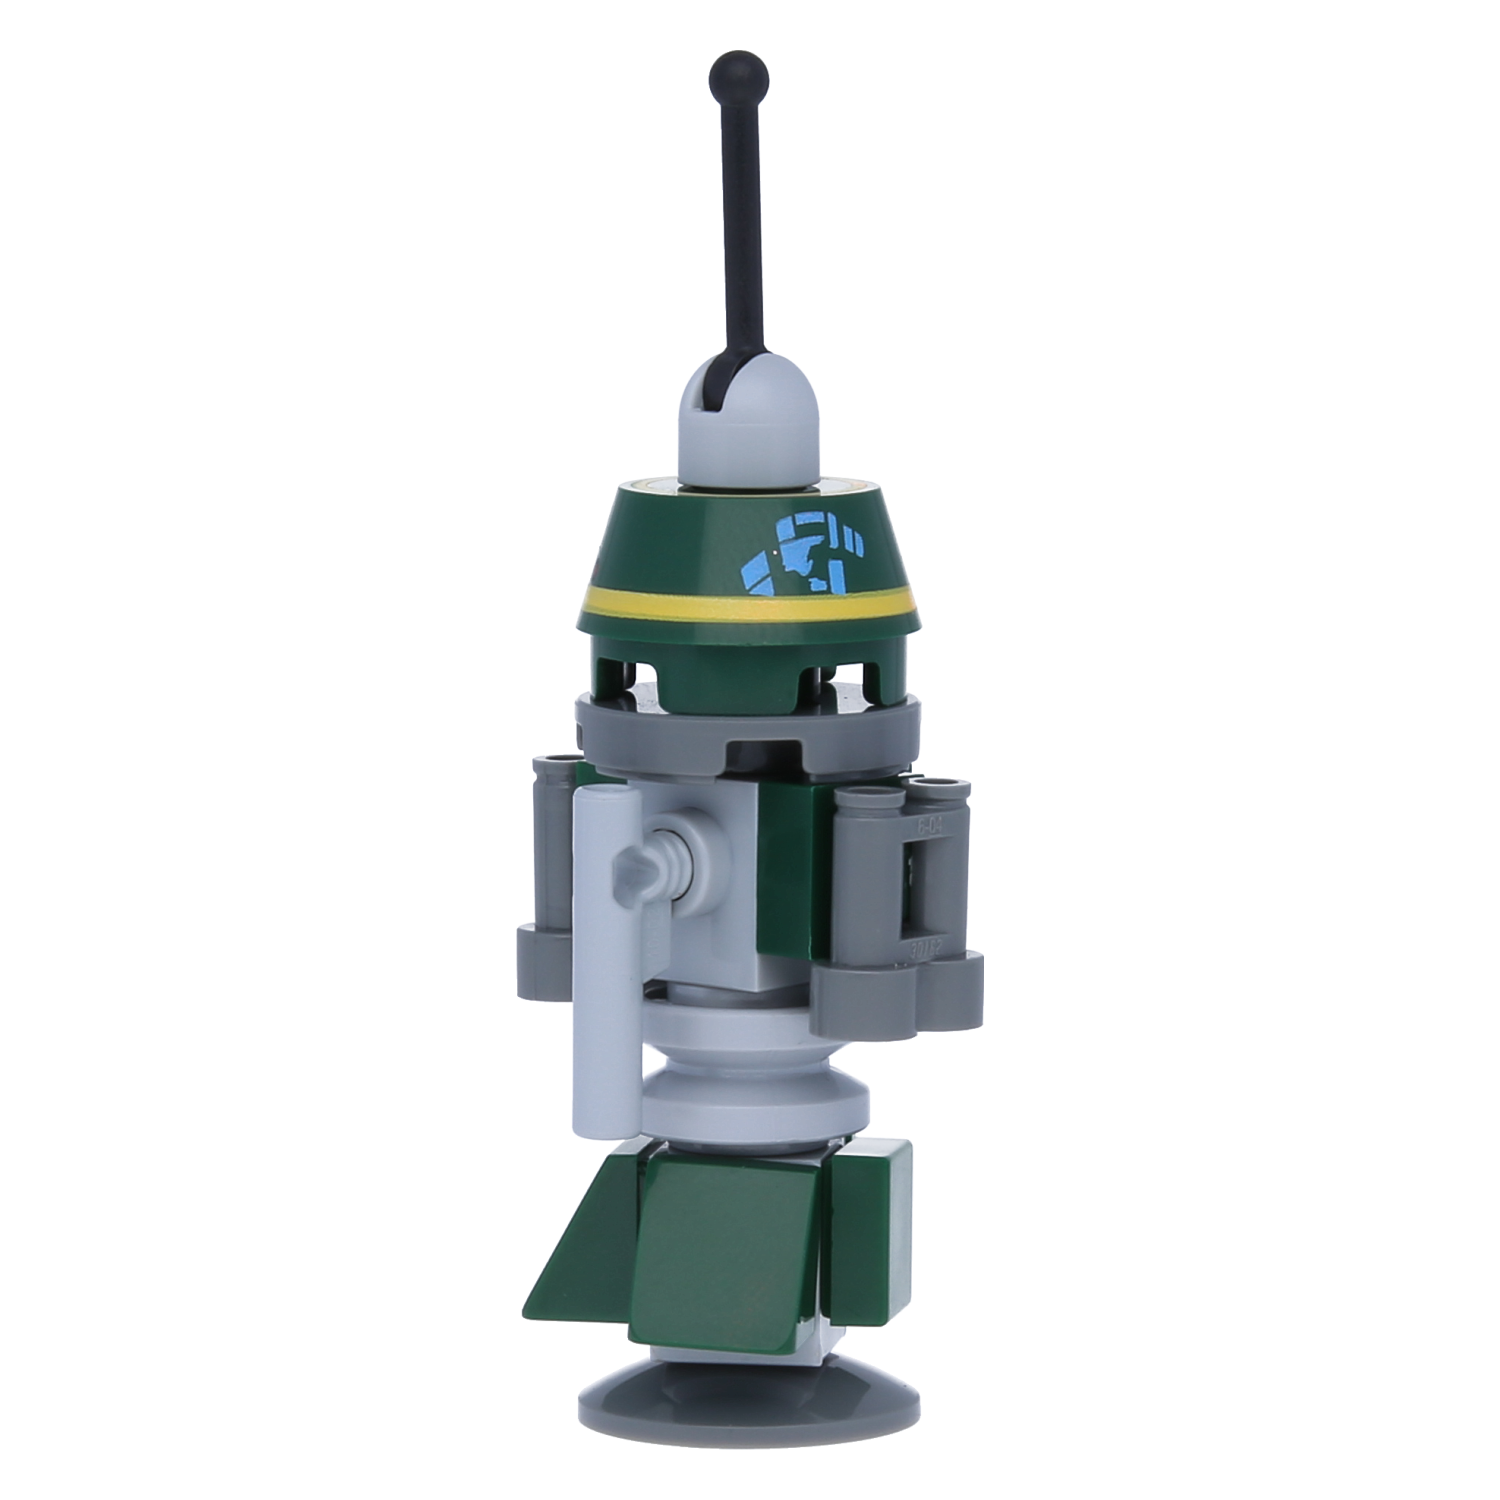 LEGO Star Wars Minifigure - R1 -Droid